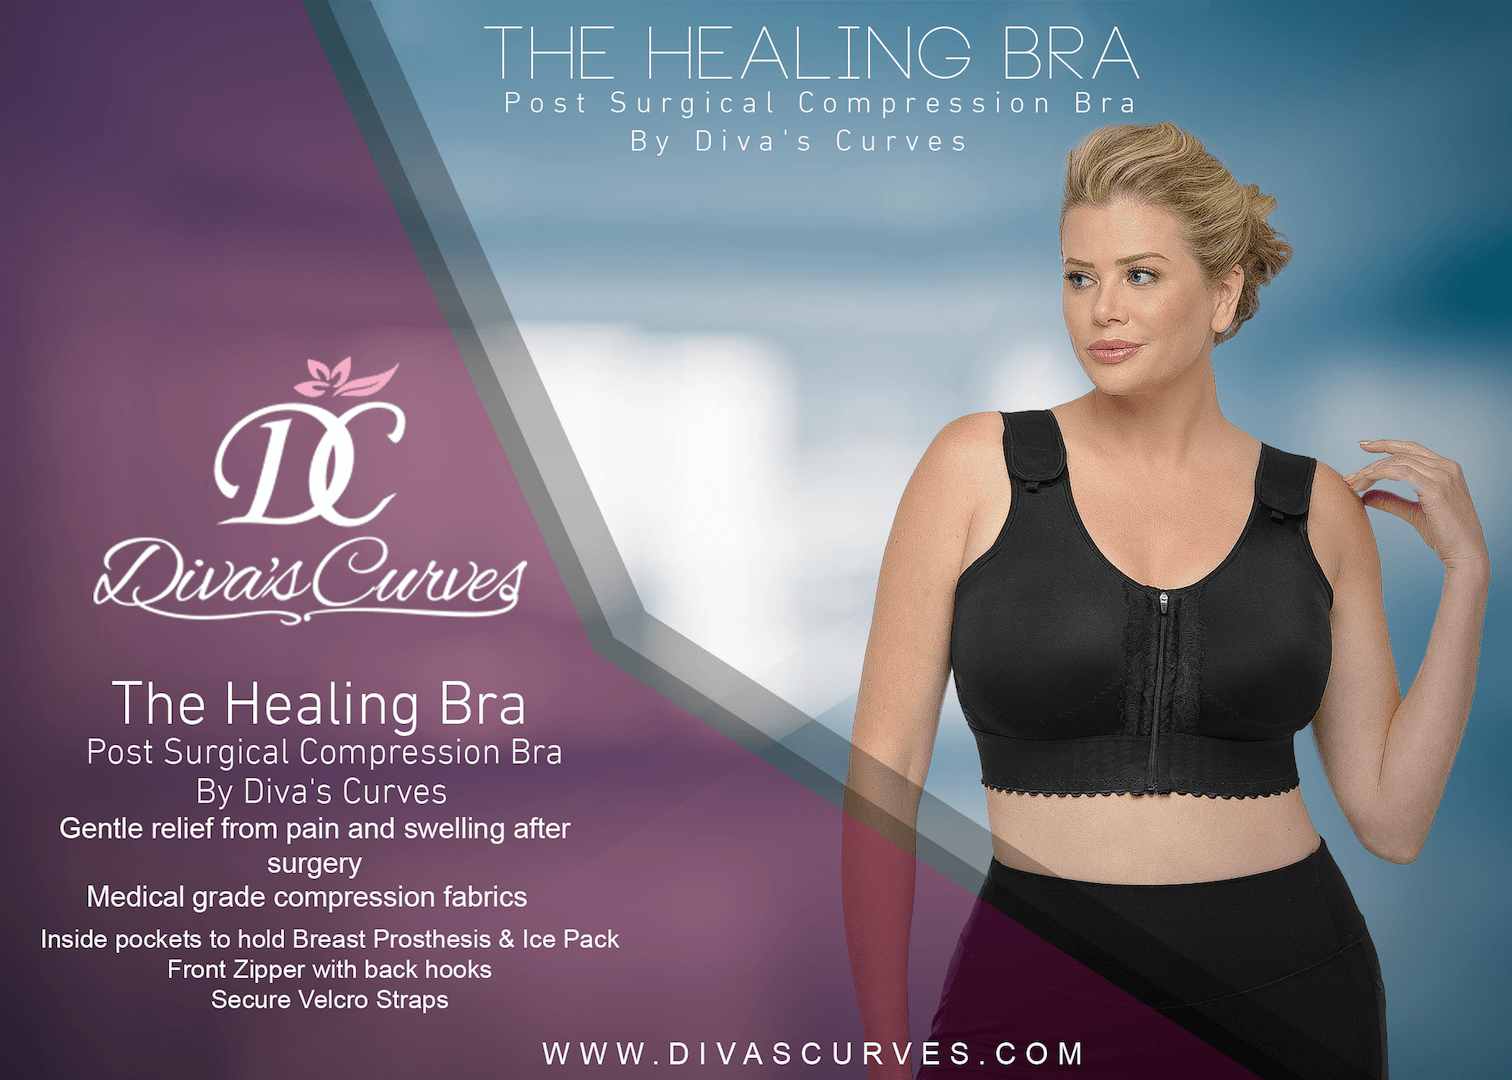  Compression Bras, Post Surgical bras, Shapewear Compression, Plus Size shapewear, Post Surgical Garments - Plus Size Compression Leggings, Bras - Diva's Curves